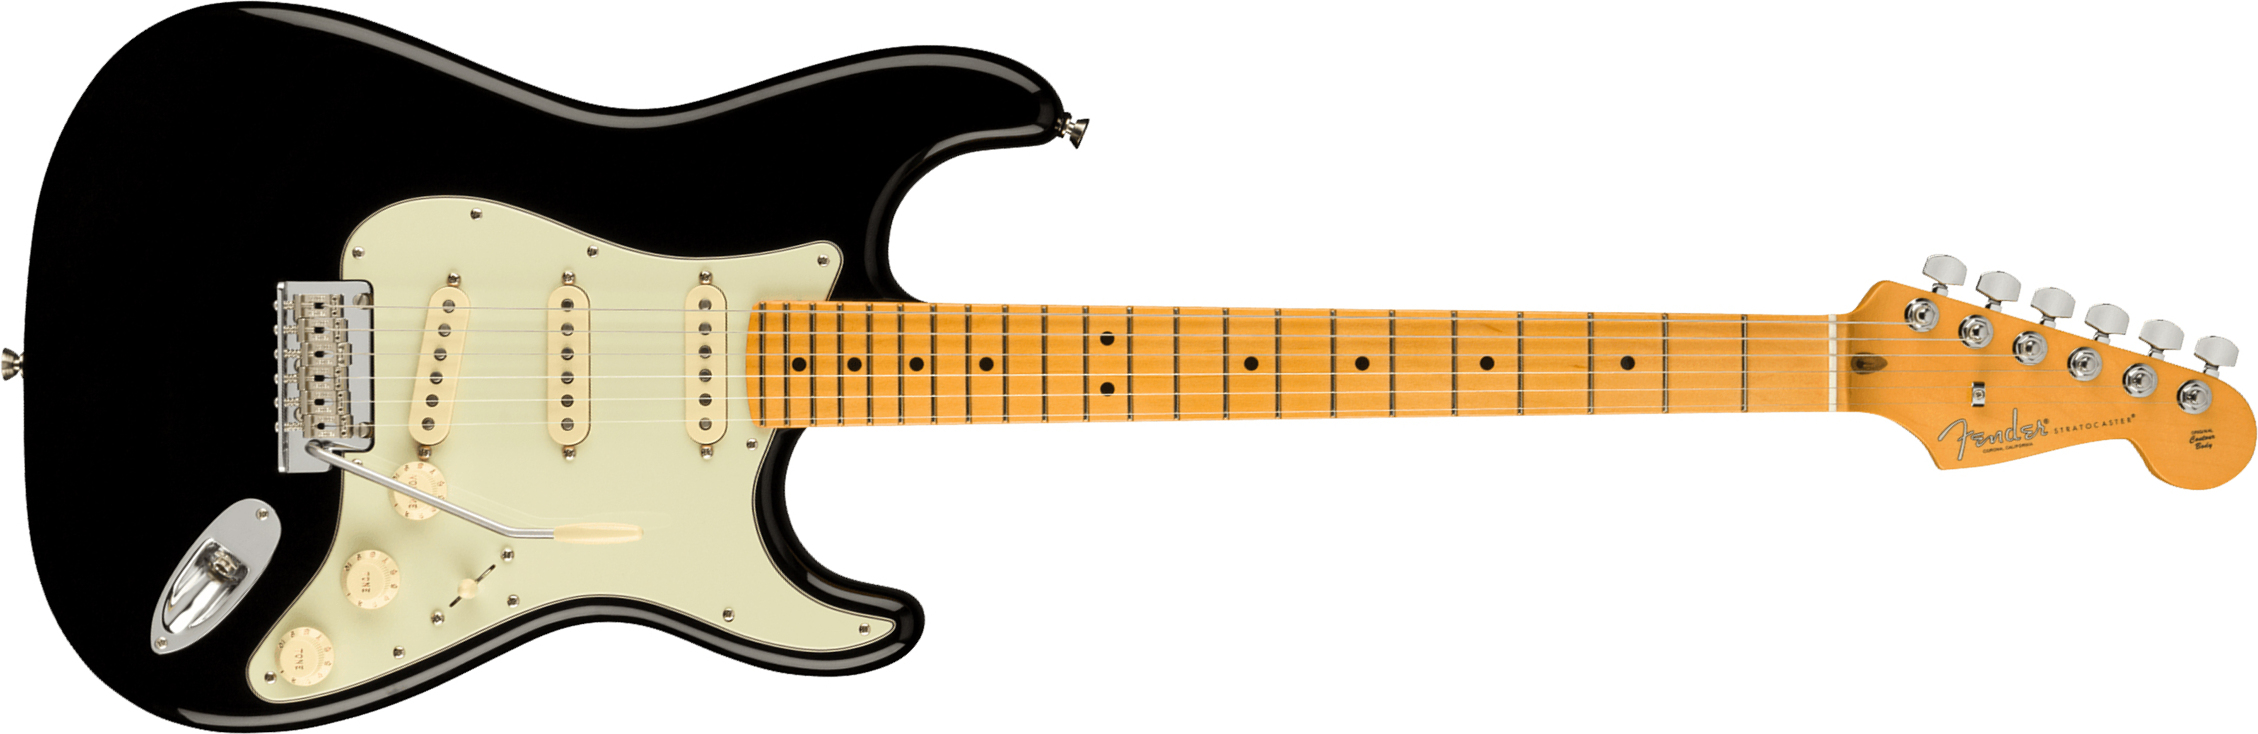 Fender Strat American Professional Ii Usa Mn - Black - Guitarra eléctrica con forma de str. - Main picture